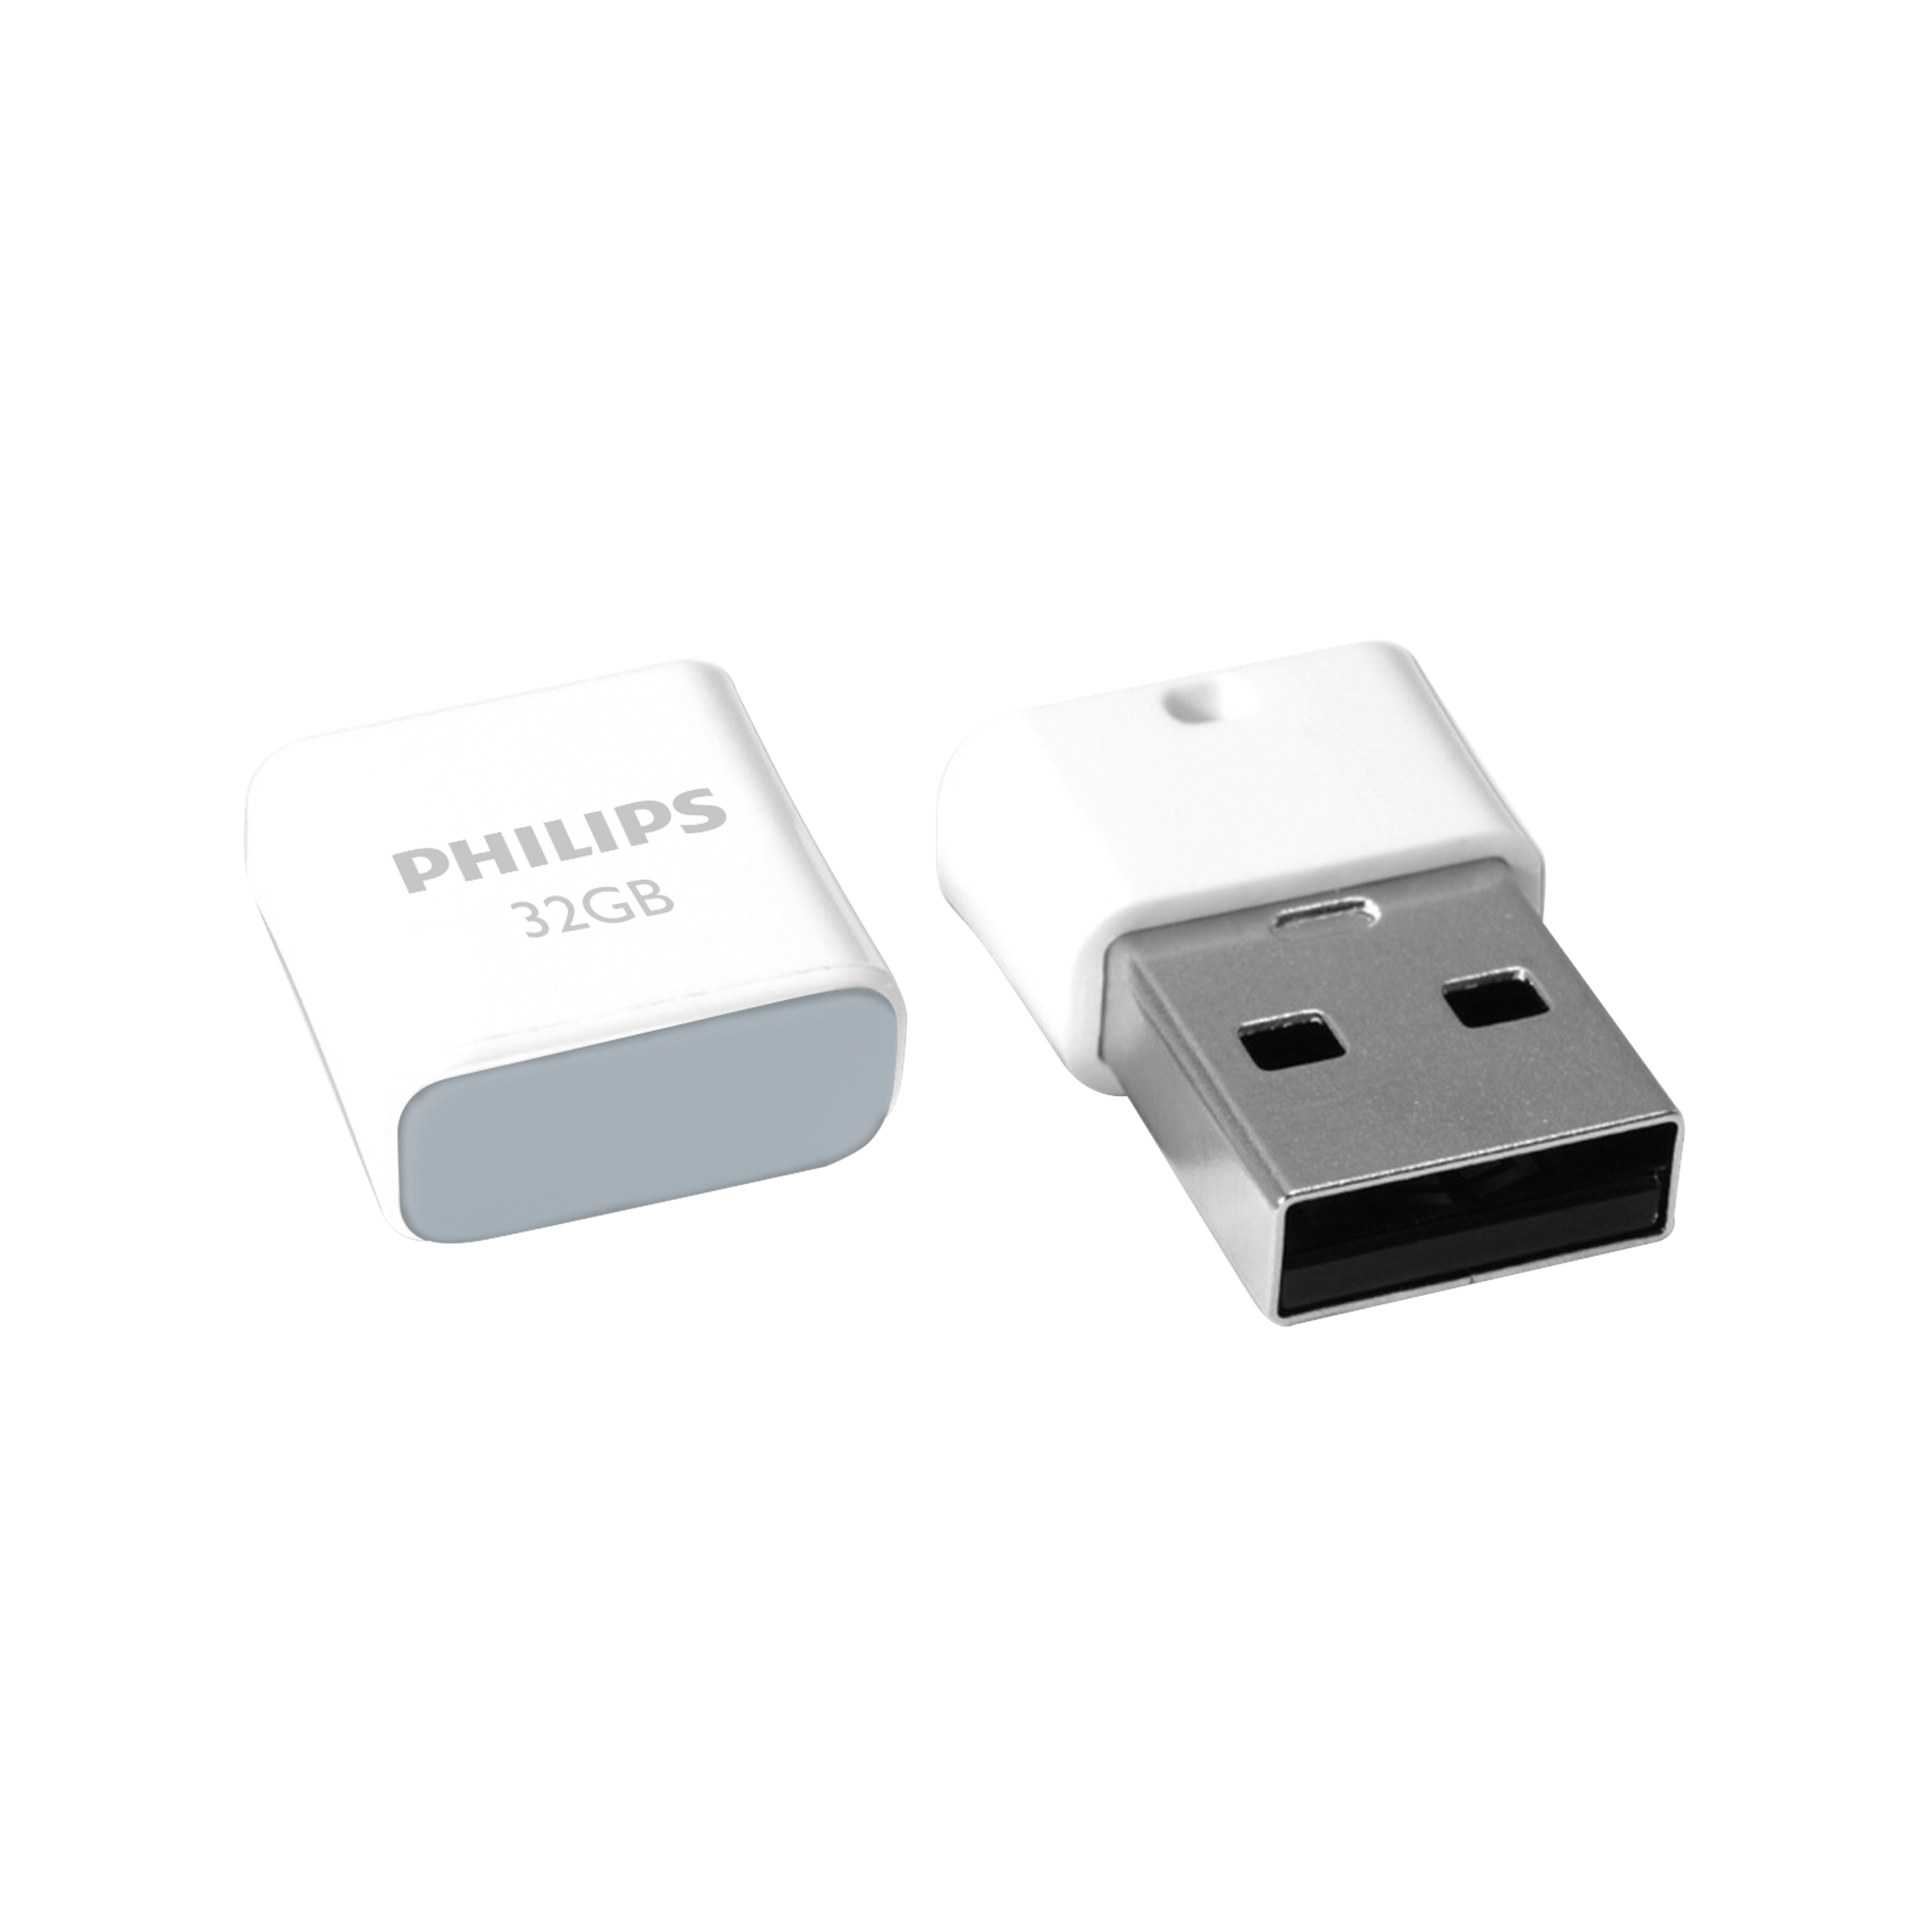 PHILIPS Pico Edition GB) USB-Stick 32 (Weiß